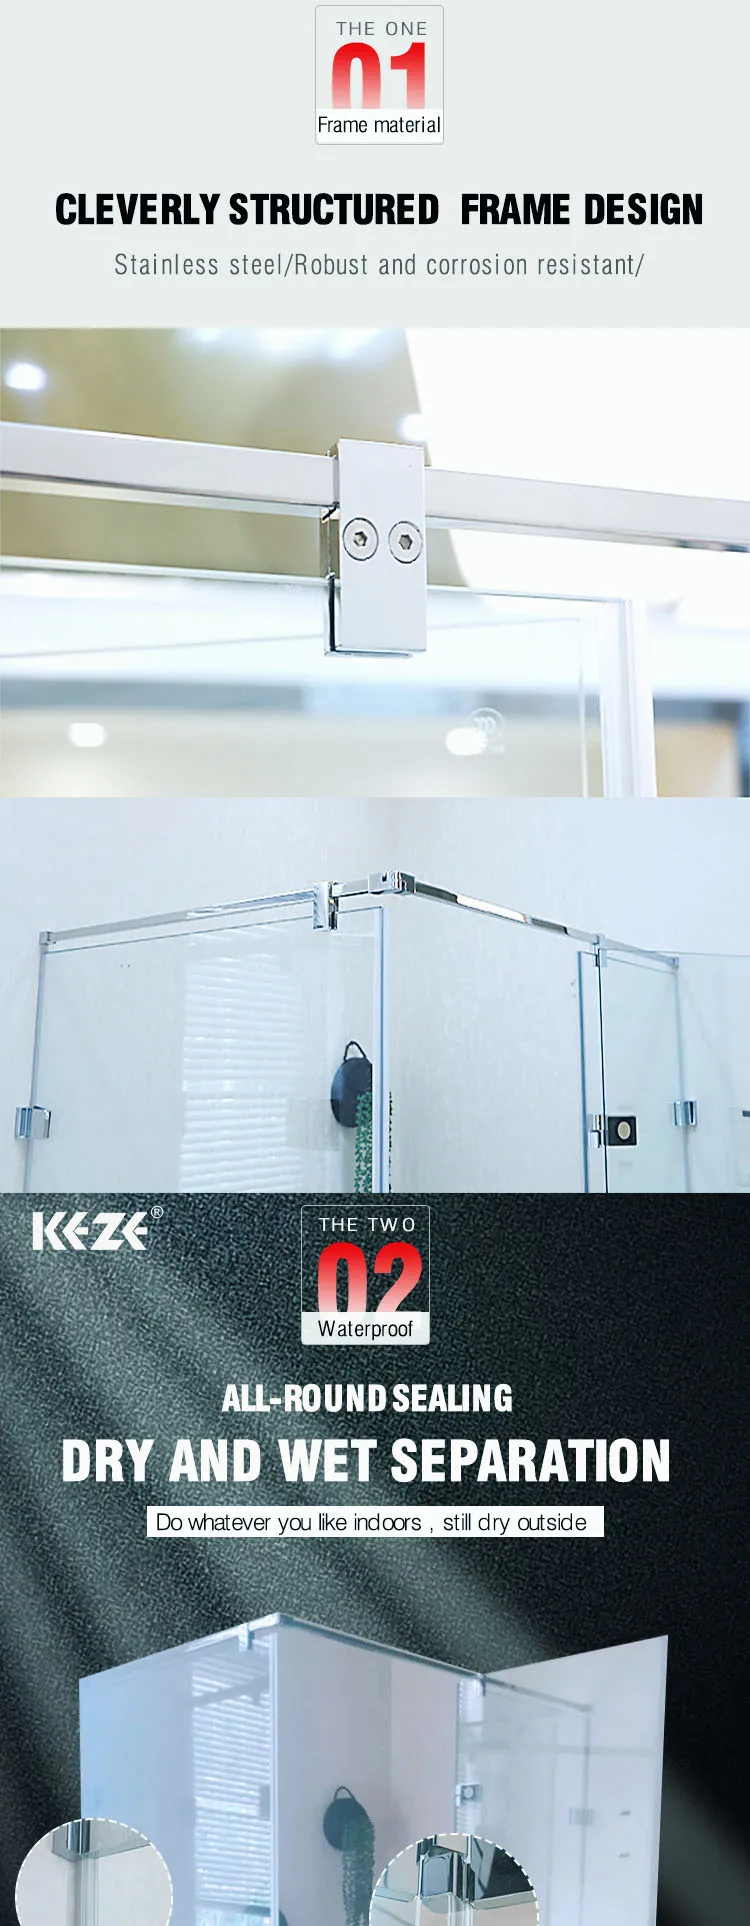 KEZE rectangle  Stainless steel tempered glass frameless hinge shower enclosure